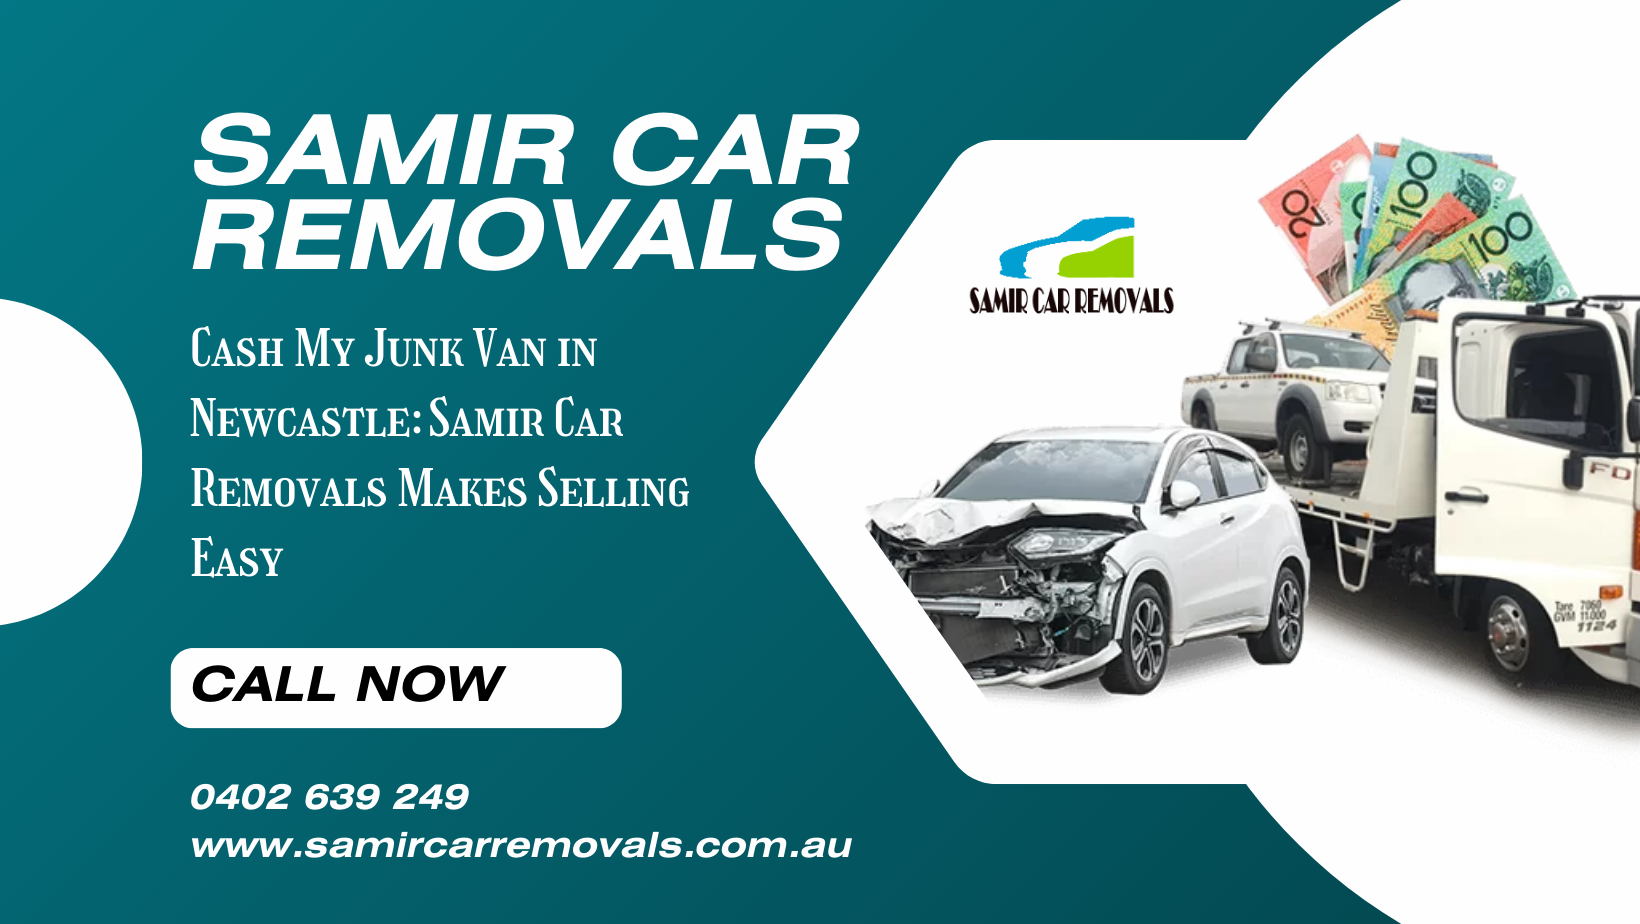 Cash My Junk Van in Newcastle: Samir Car Removals Makes Selling Easy